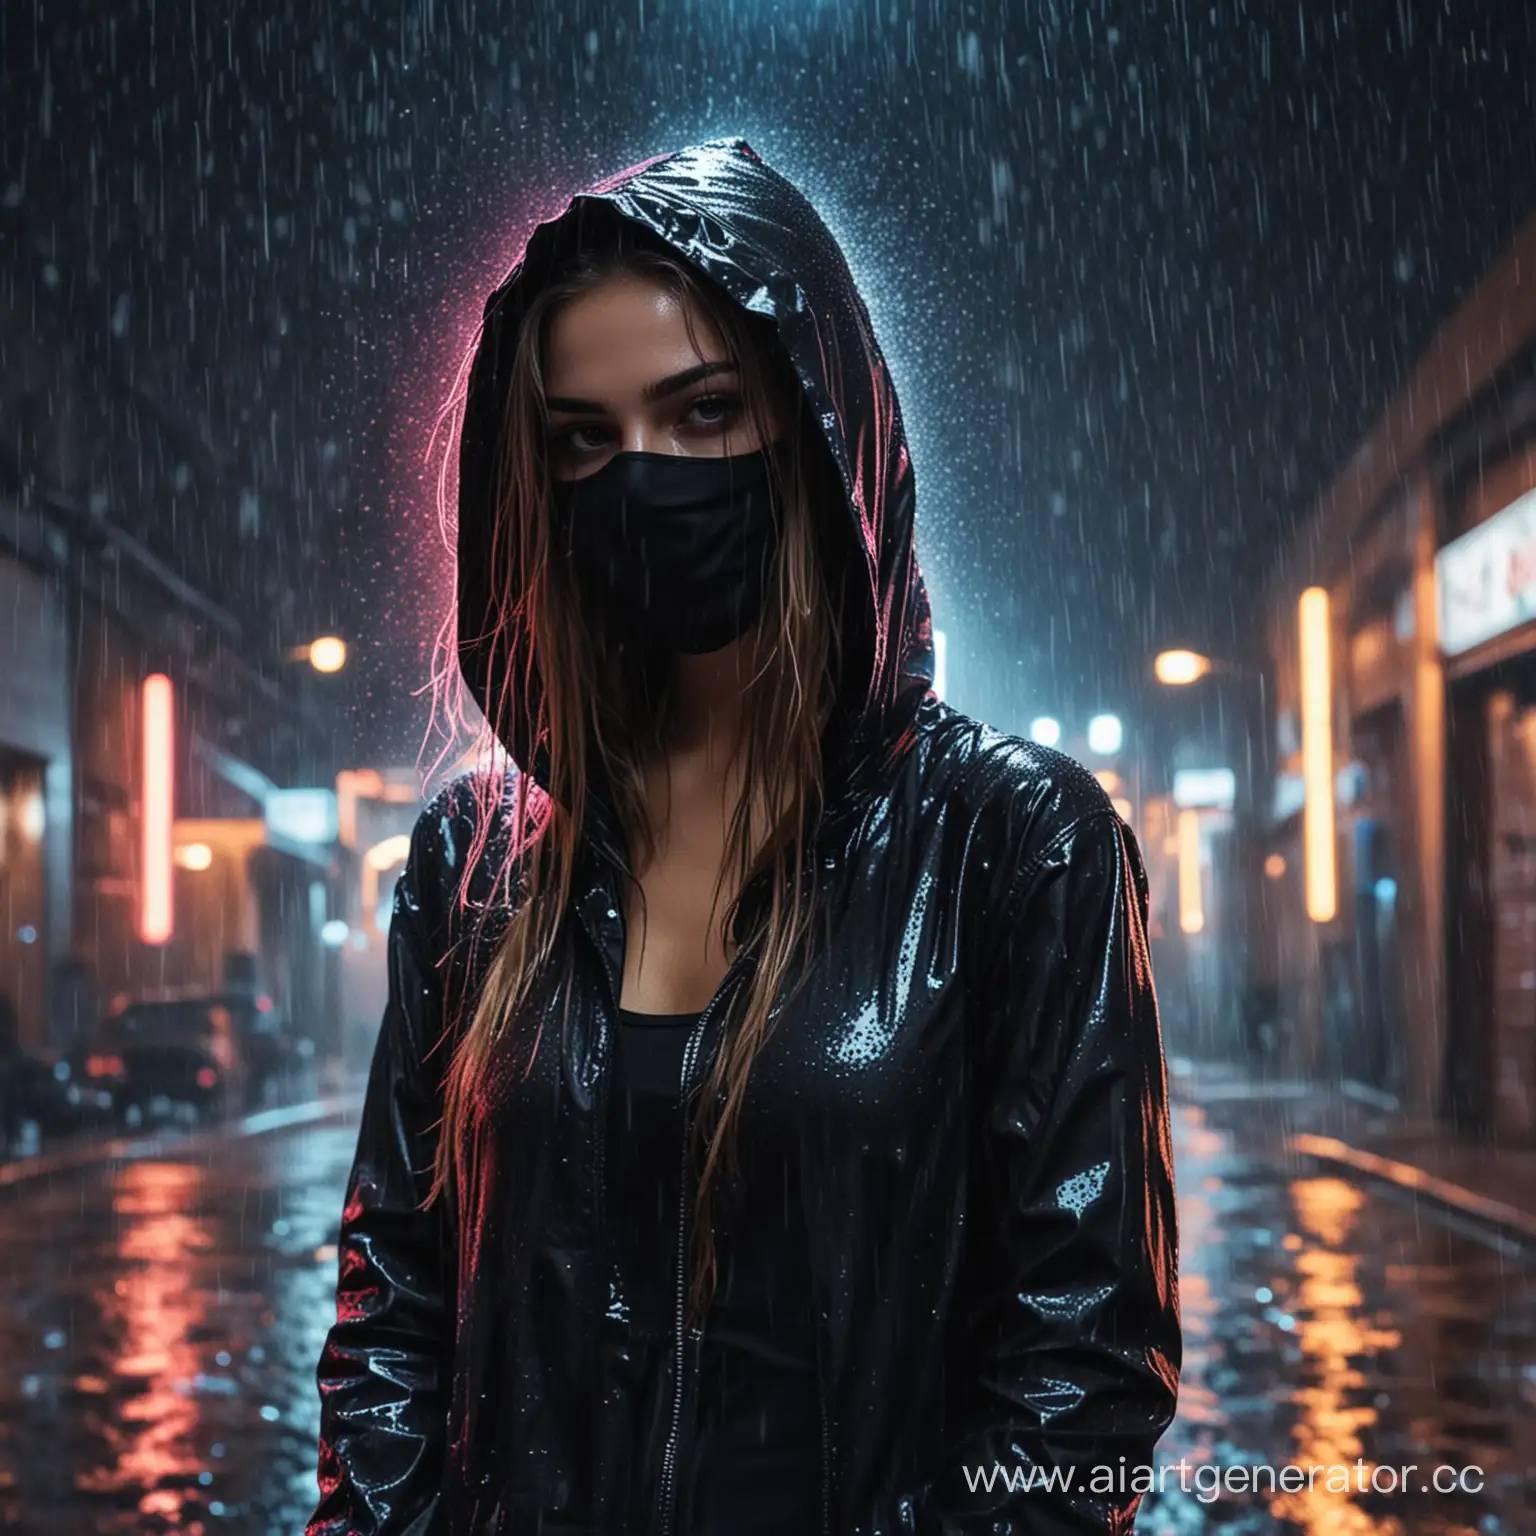 Urban-Night-Rain-Girl-in-Hood-and-Black-Mask-under-Neon-Lights